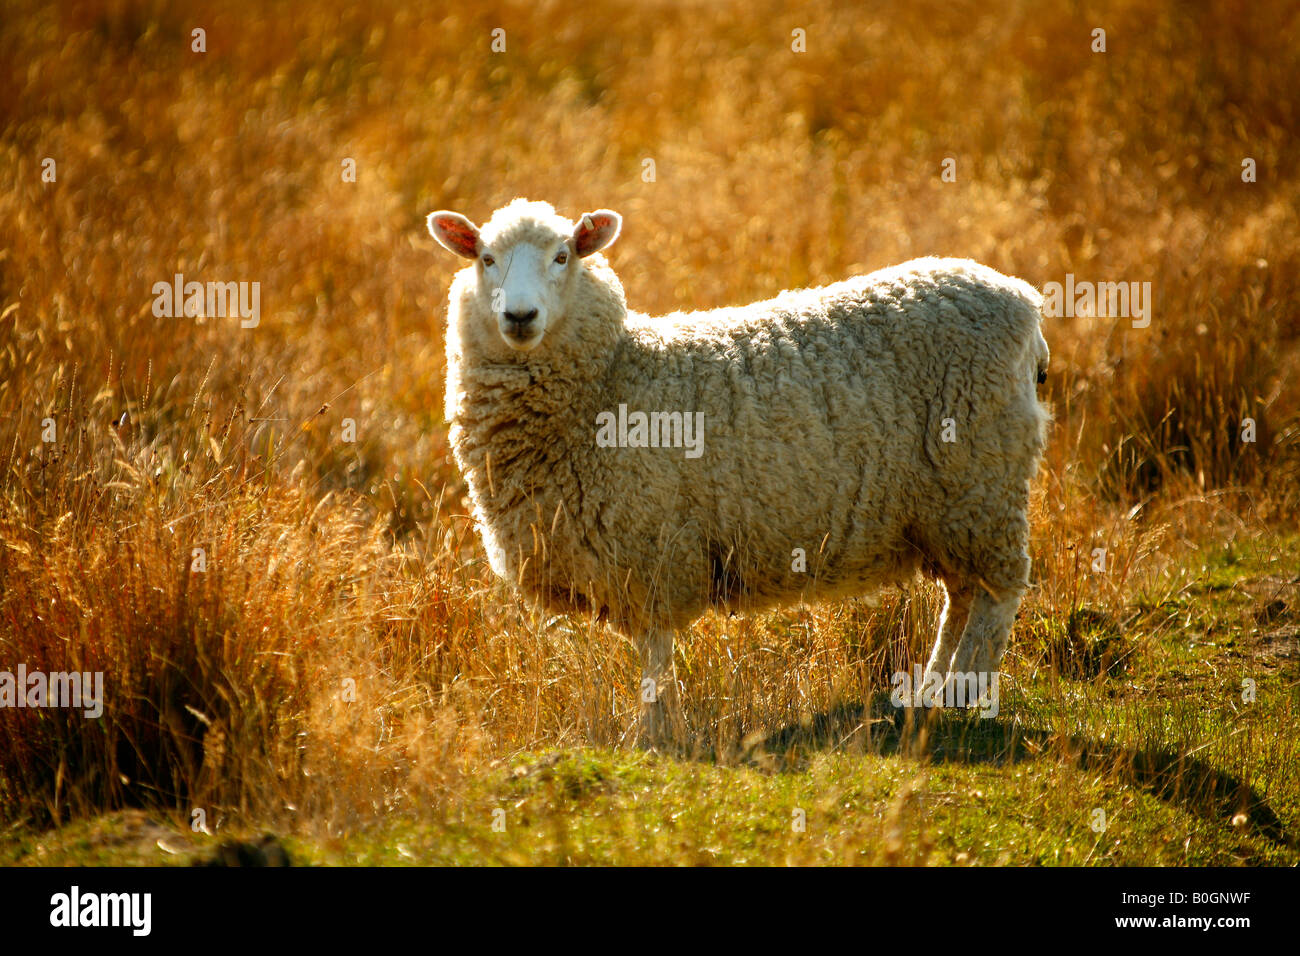 Sheep Central Otago New Zealand Stock Photo